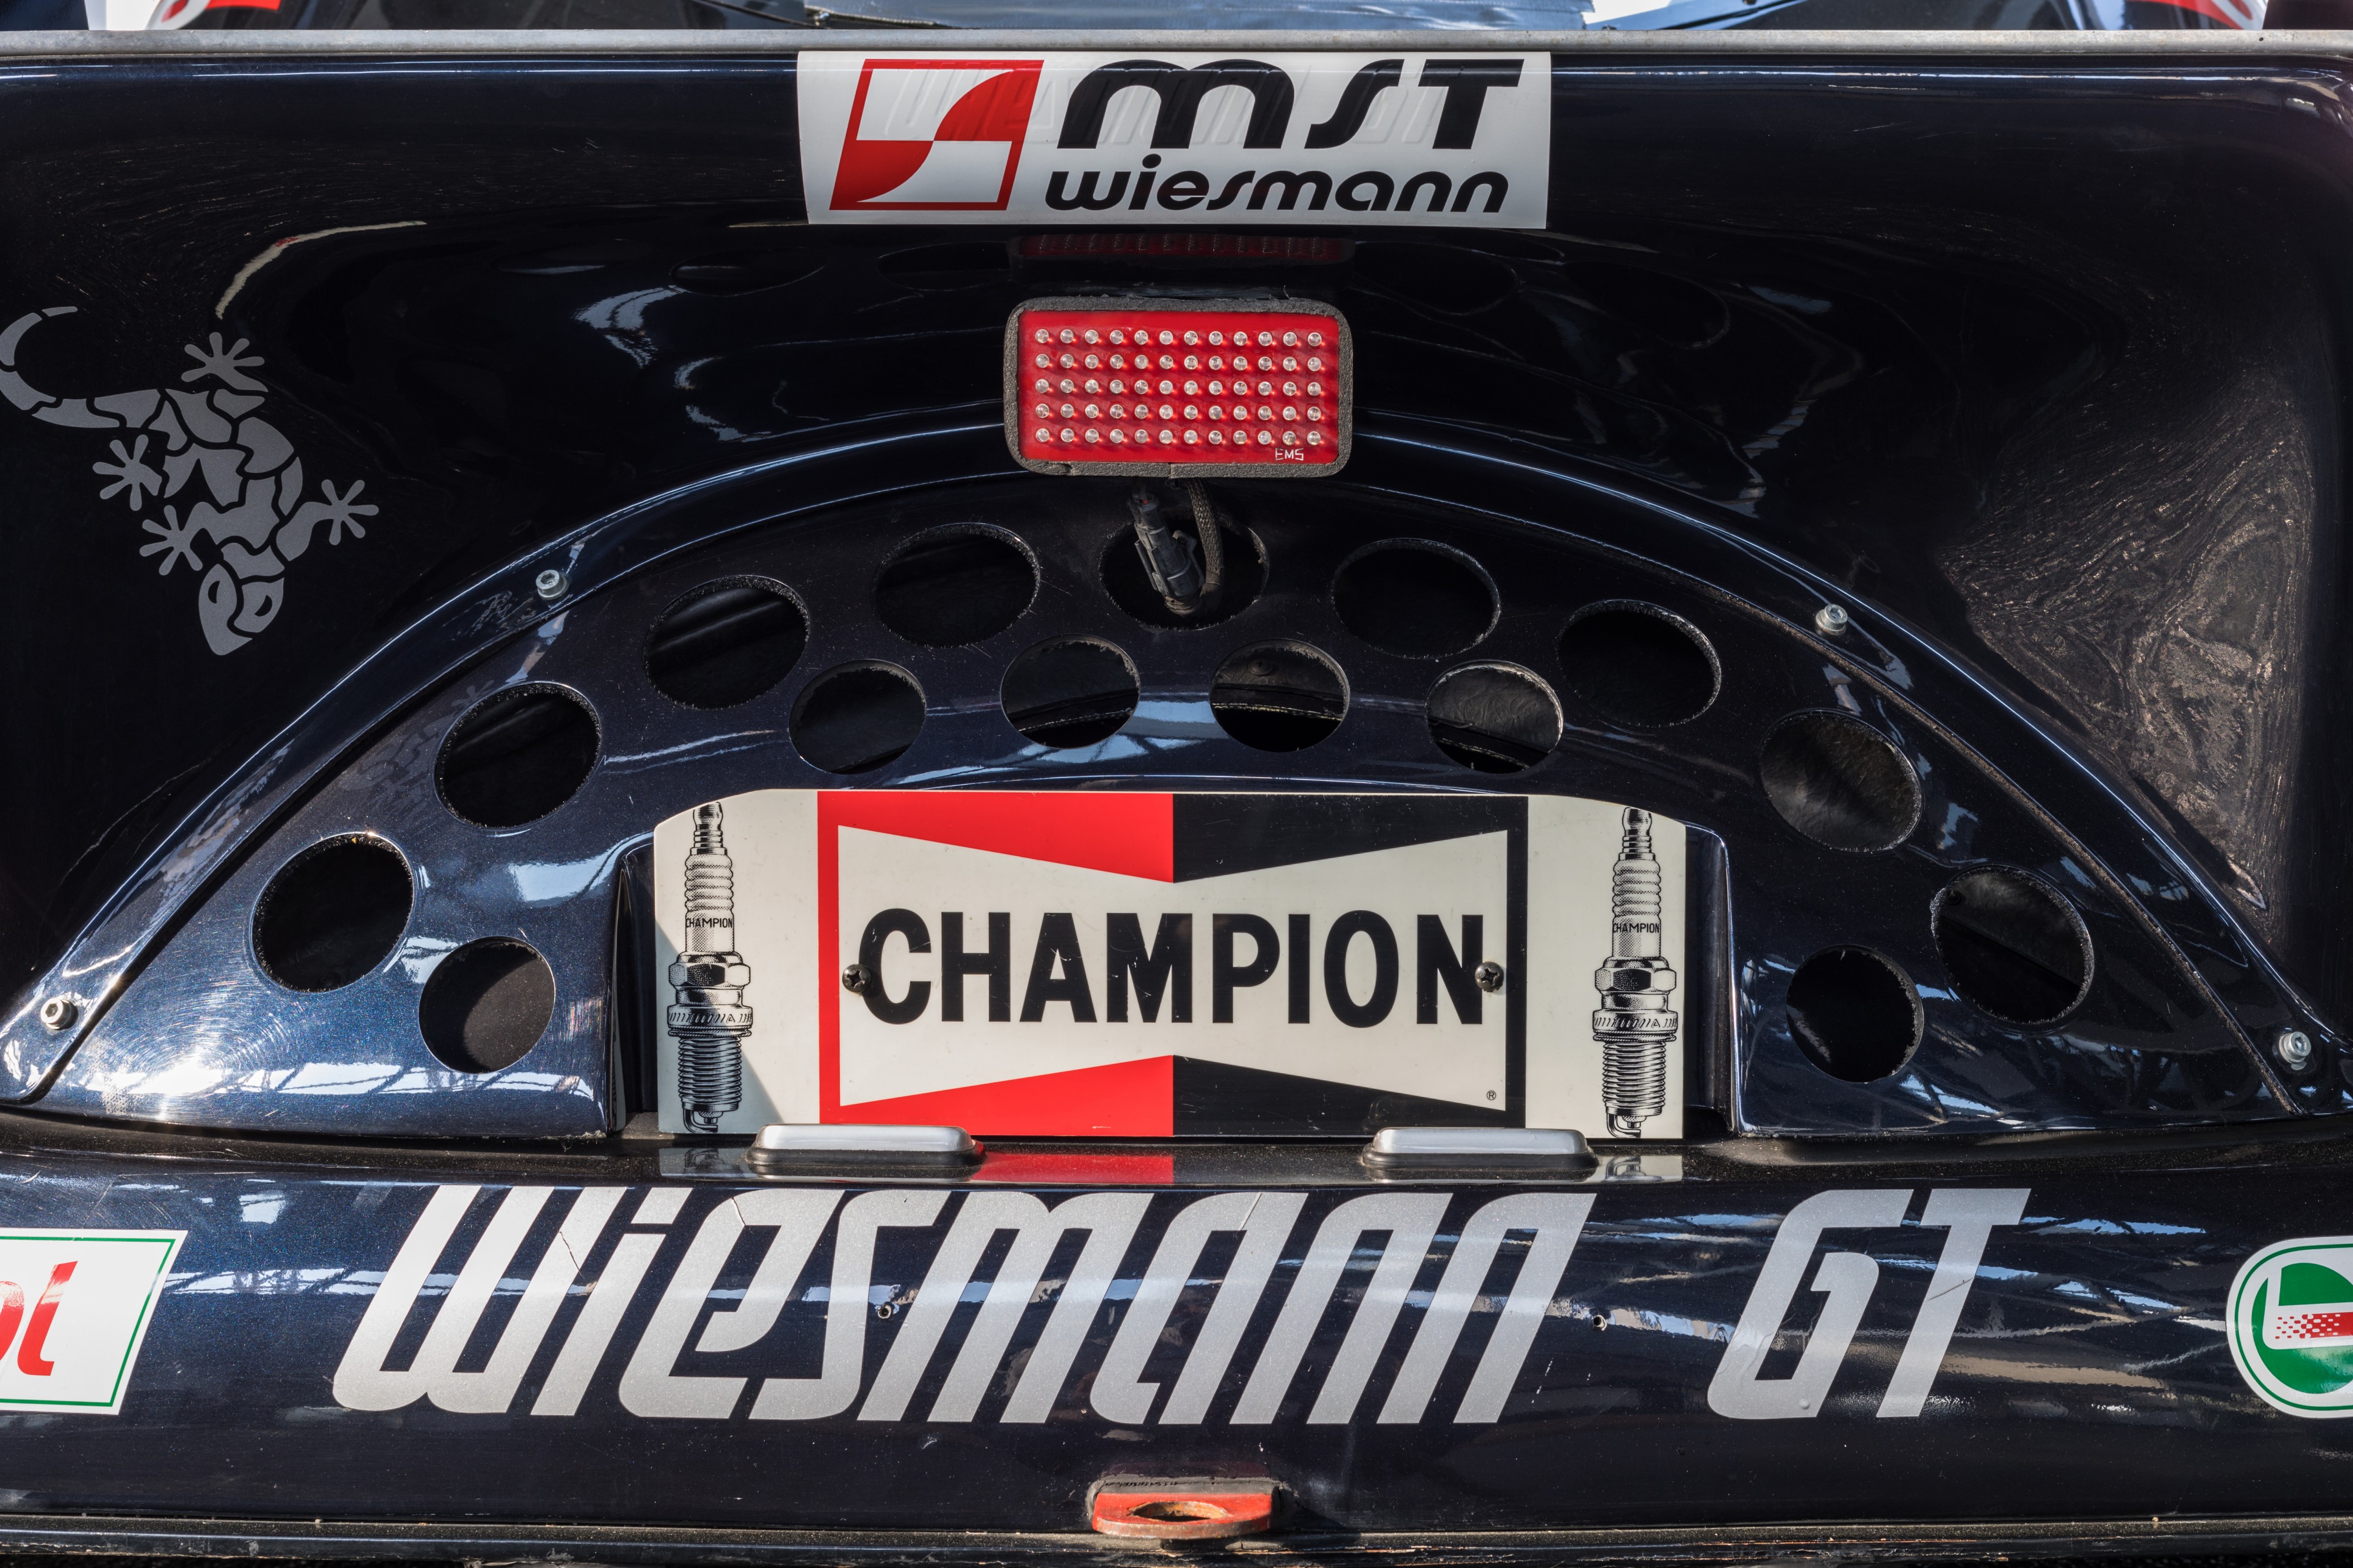 Dülmen, Wiesmann Sports Cars, Wiesmann GT -- 2018 -- 9604